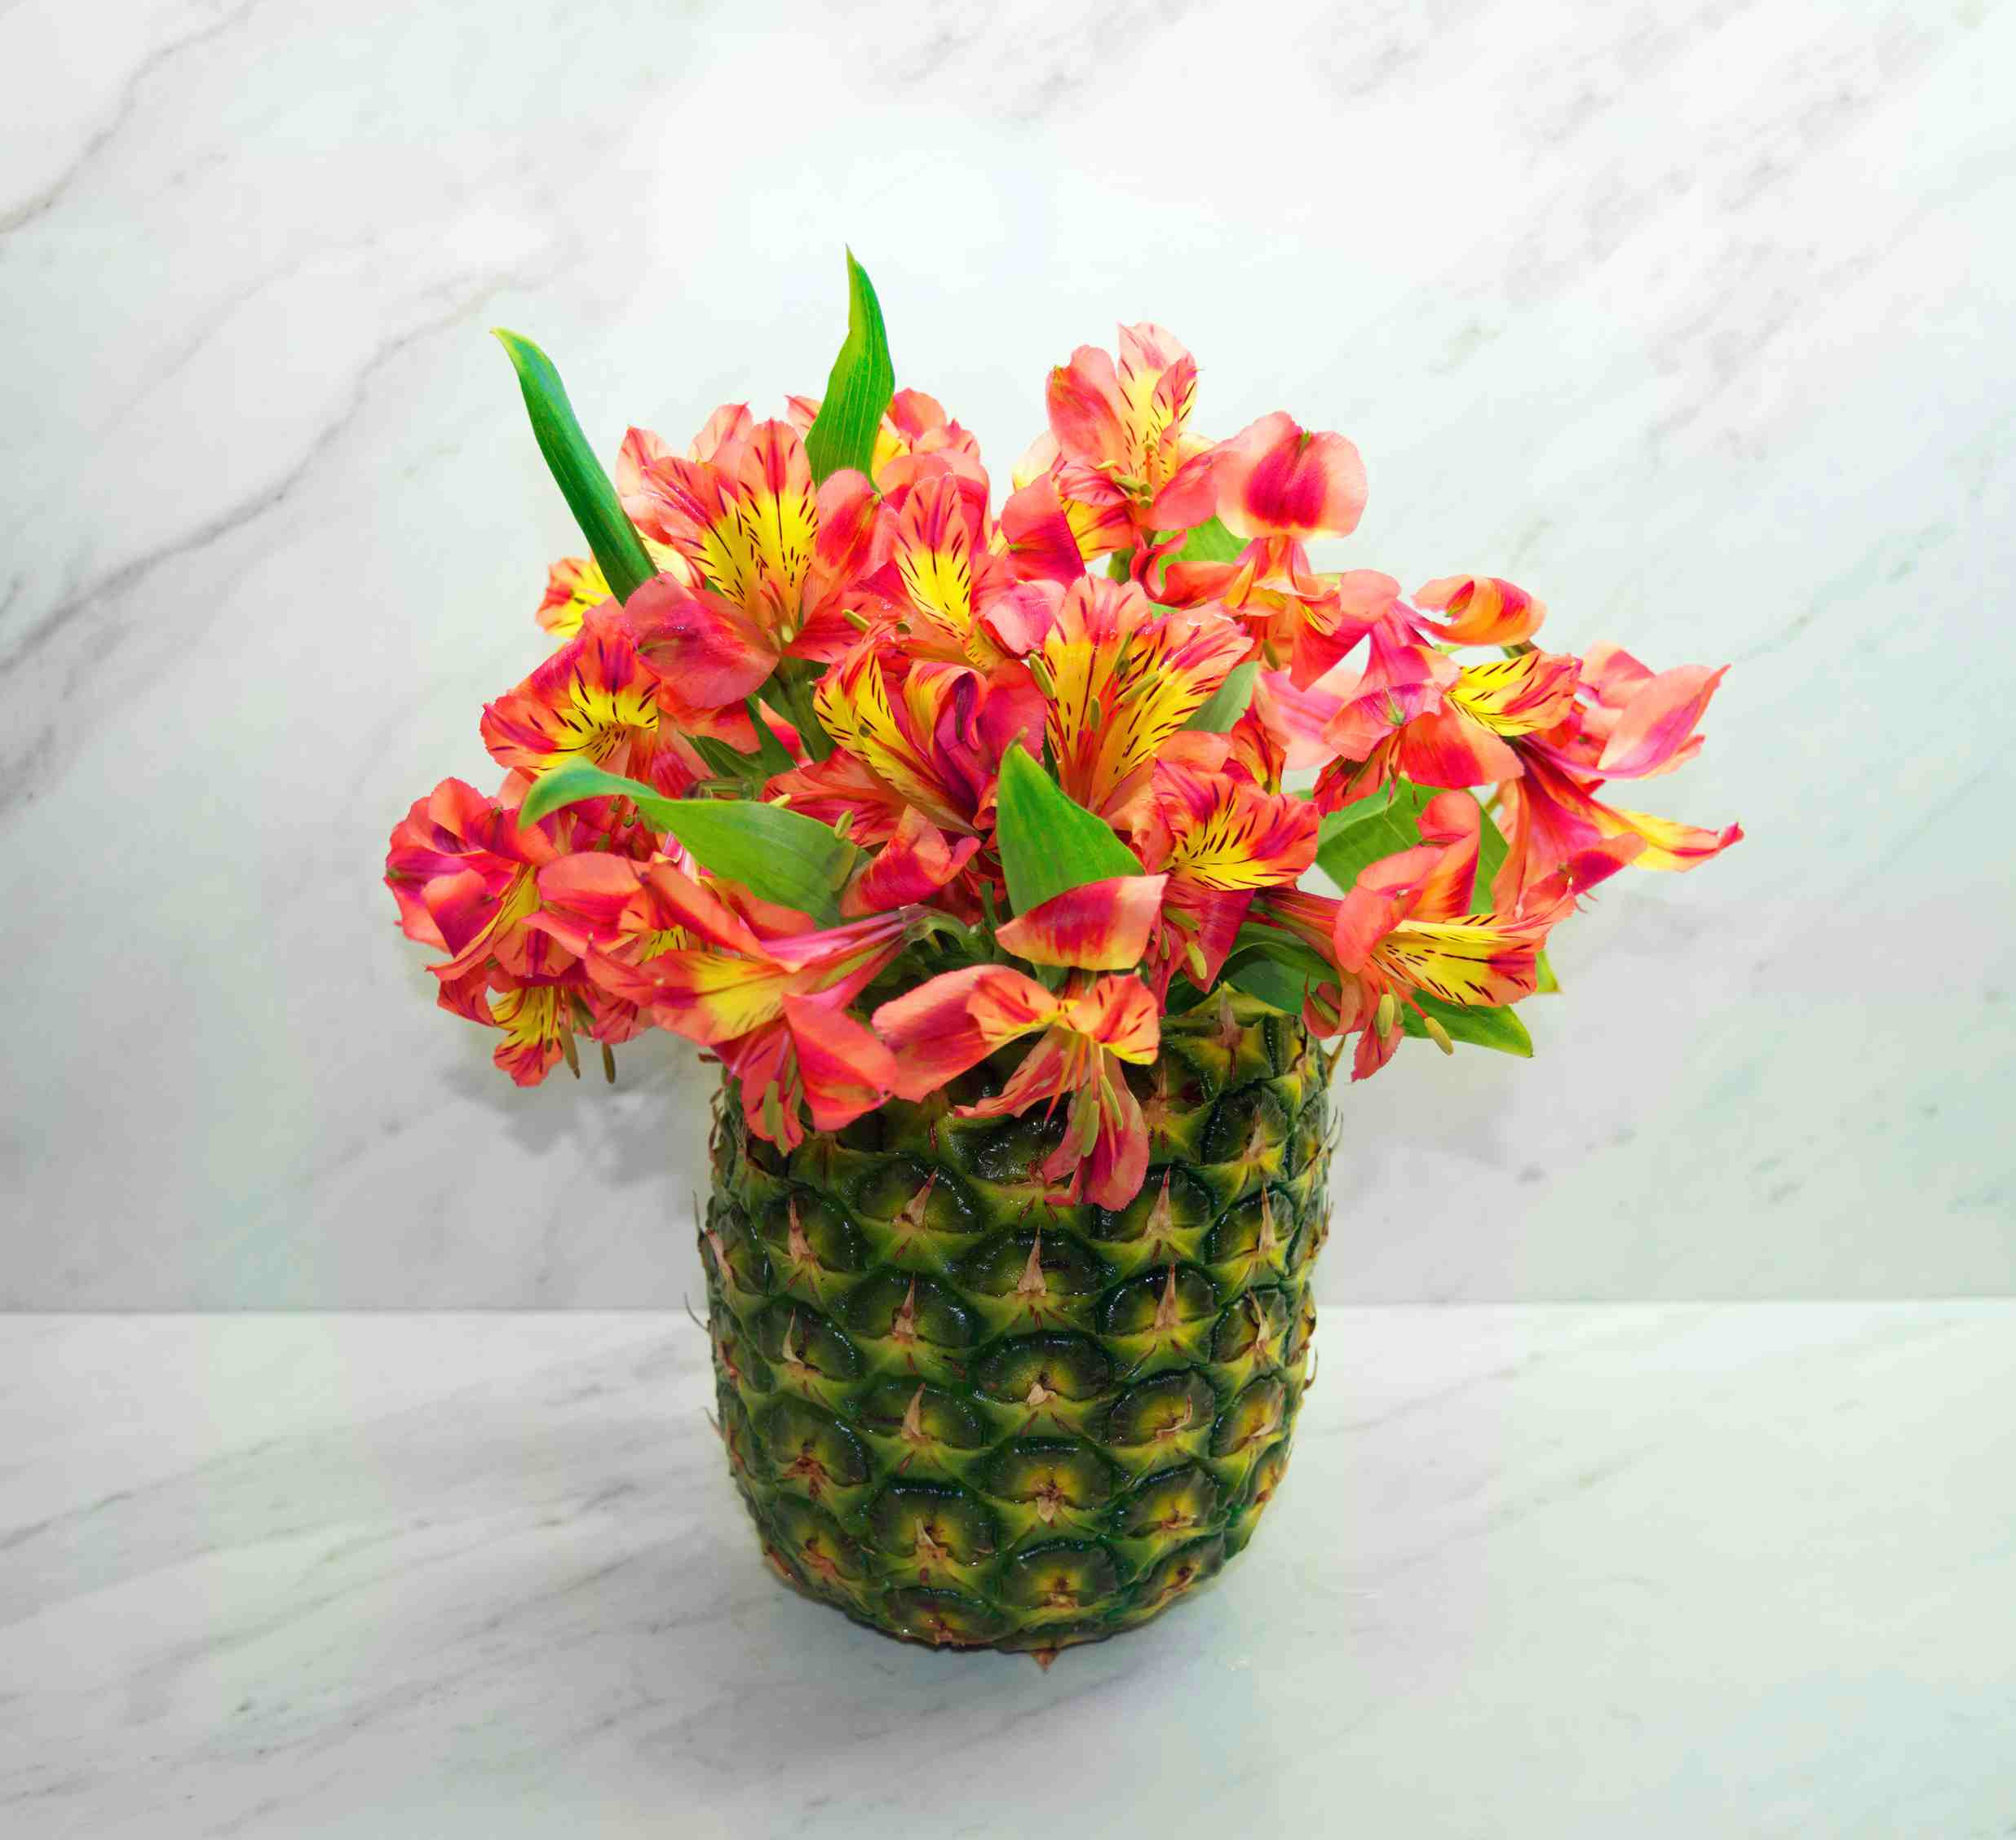 glass vase white flowers of diy pineapple vase floral arrangement intended for diy pineapple vase 56a262c53df78cf77274f3c3